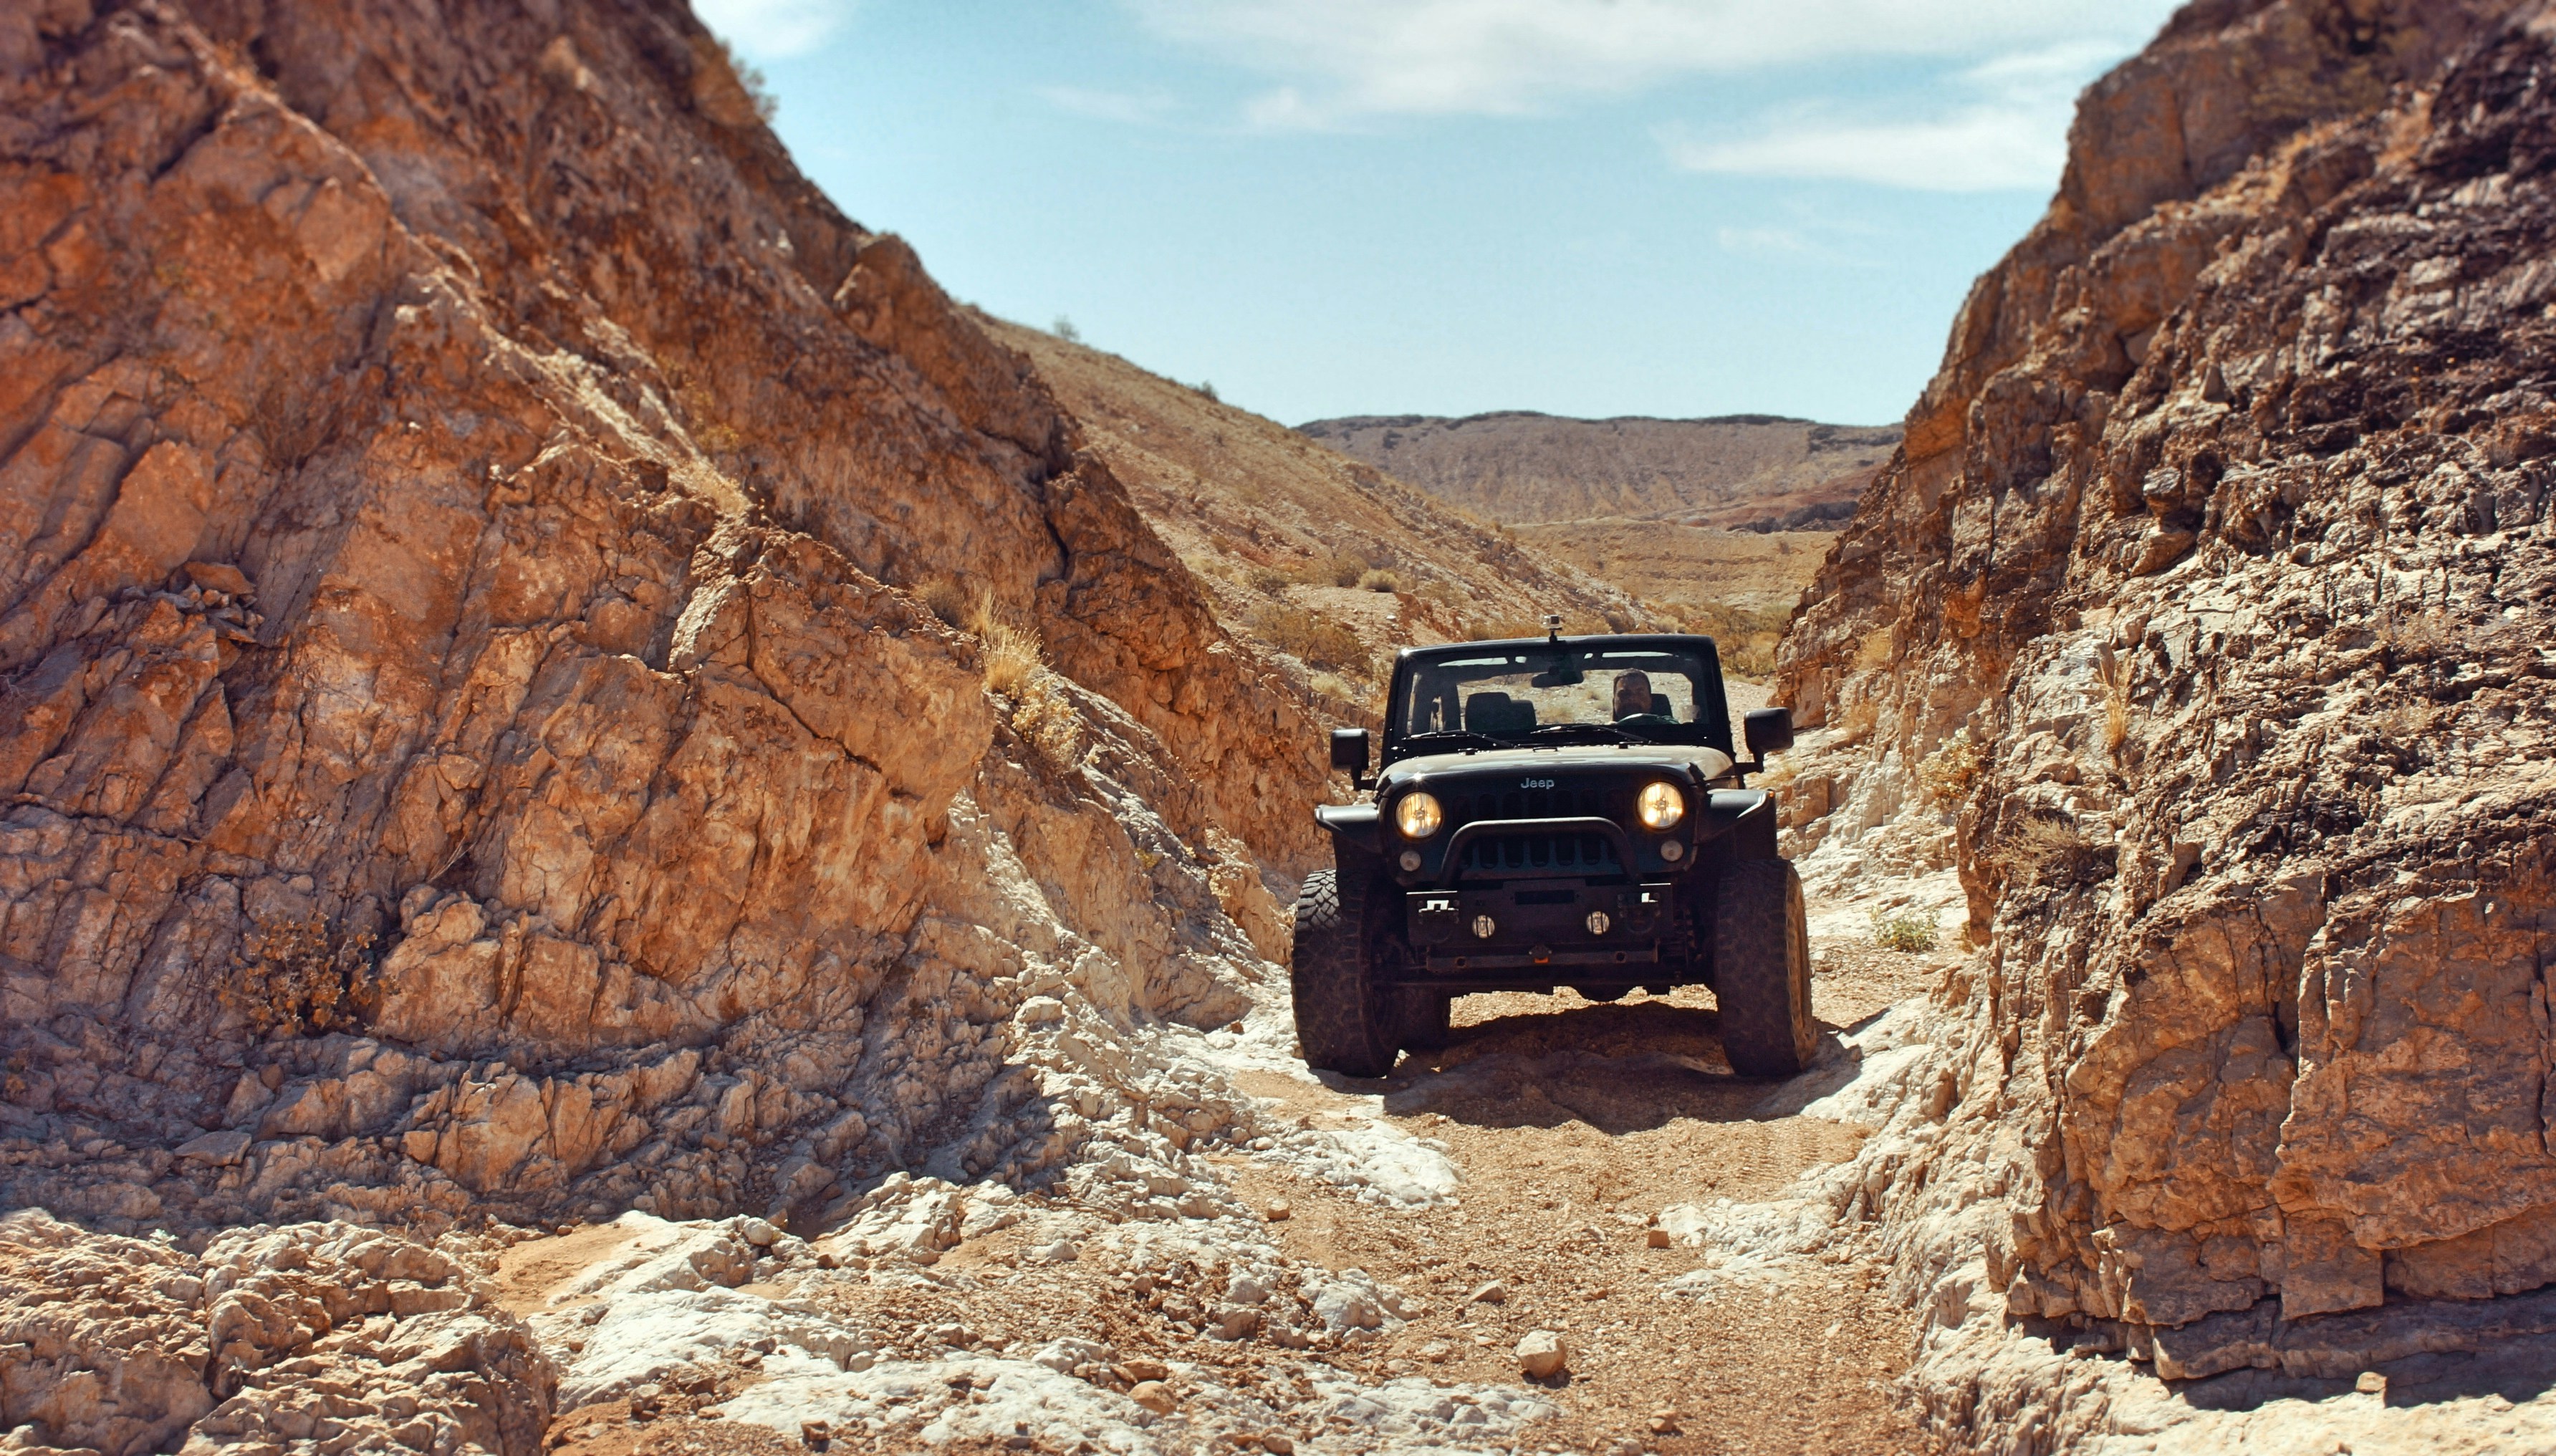 Black jeep Nevada desert